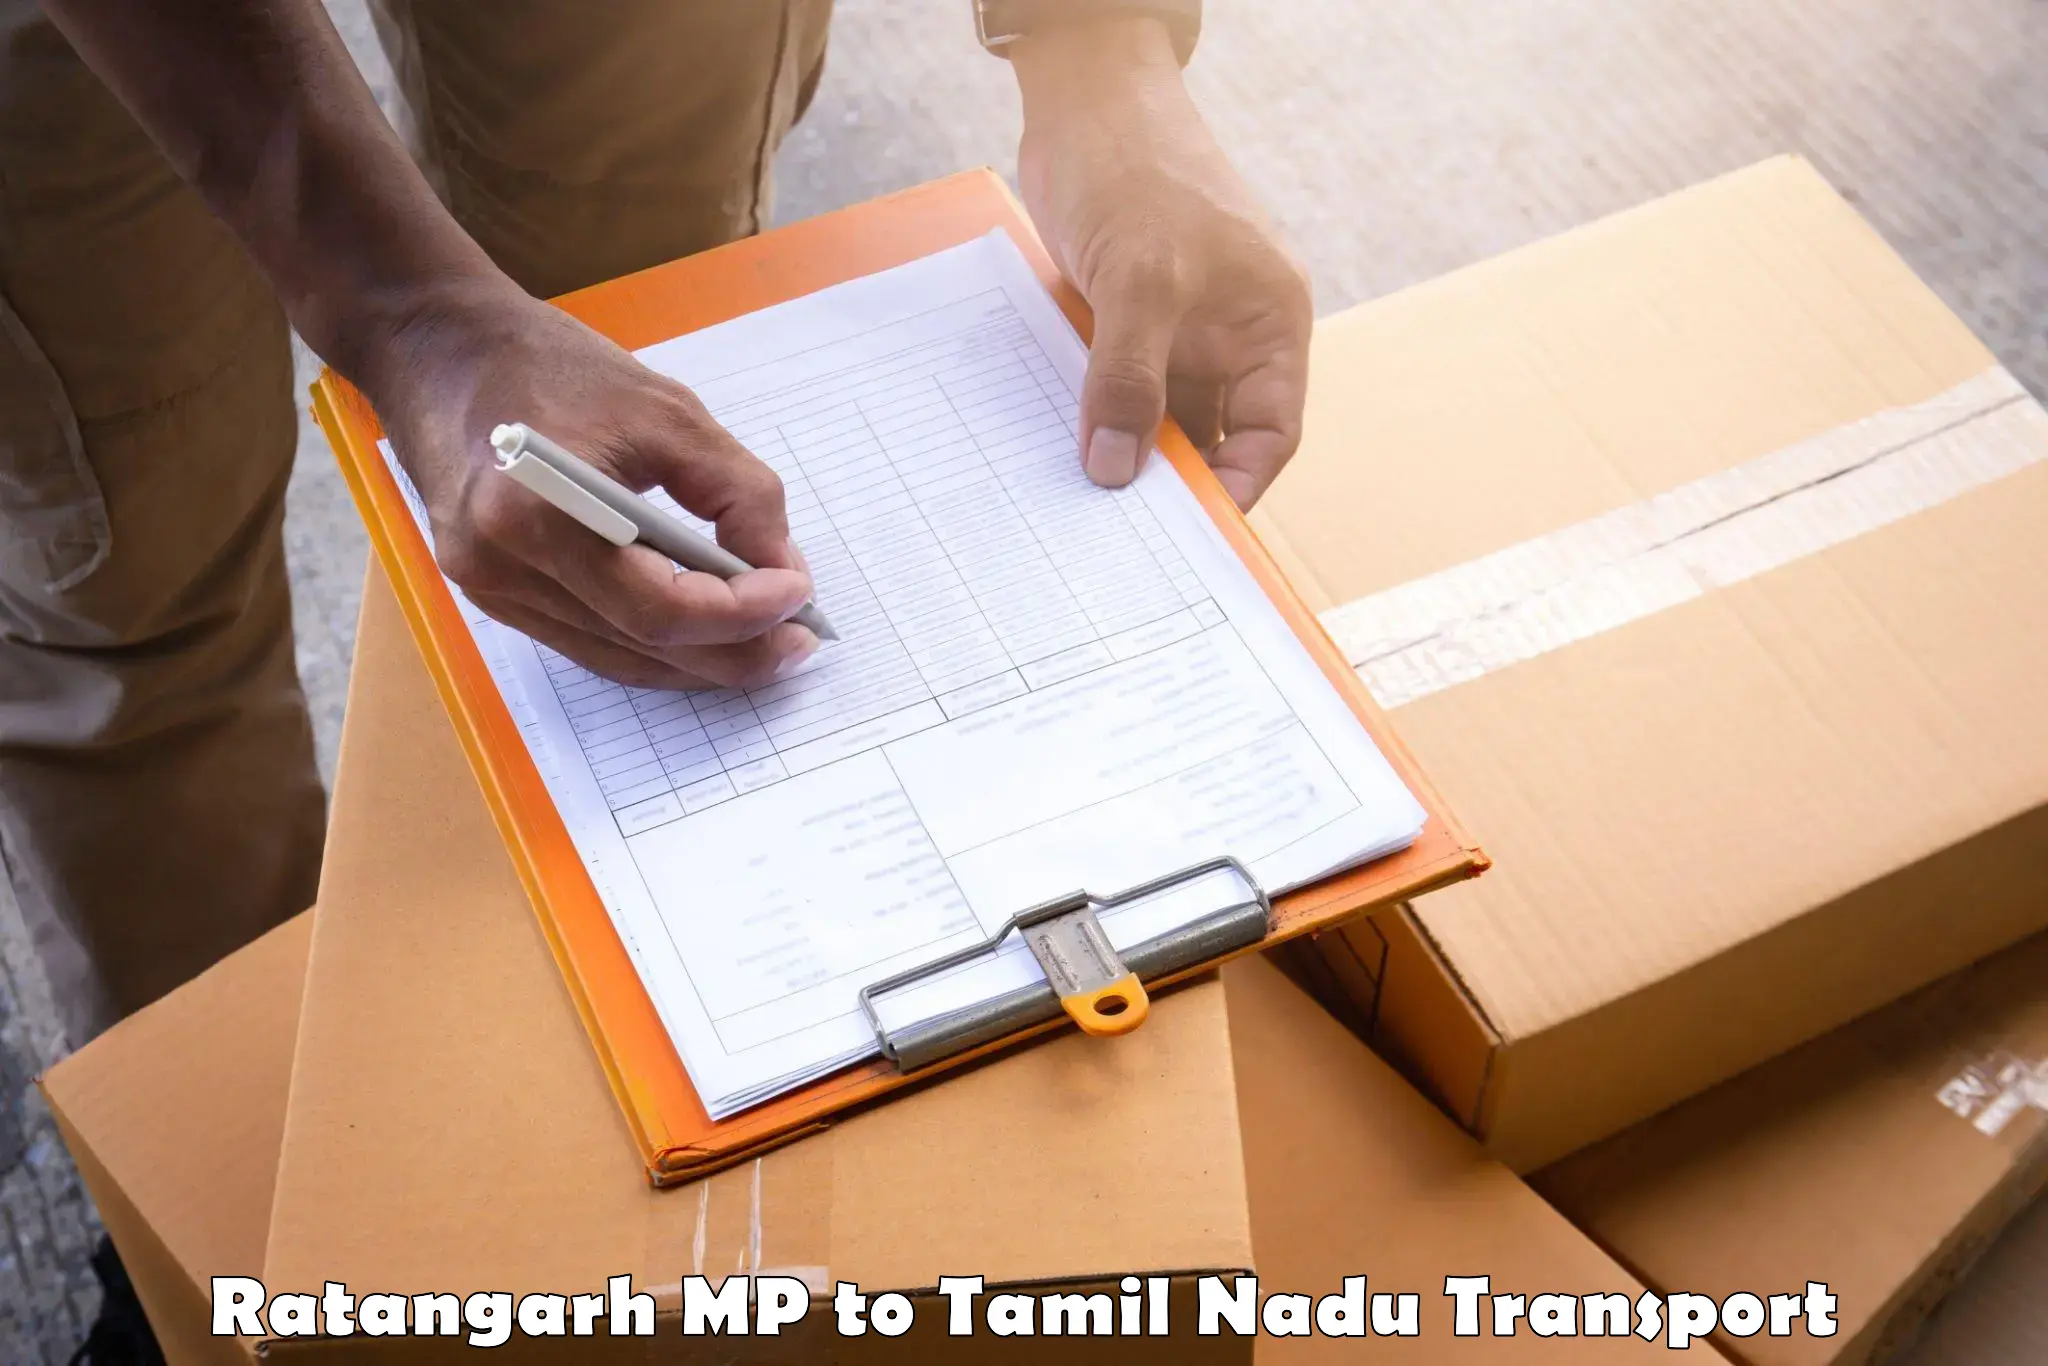 Domestic goods transportation services Ratangarh MP to Ayyampettai